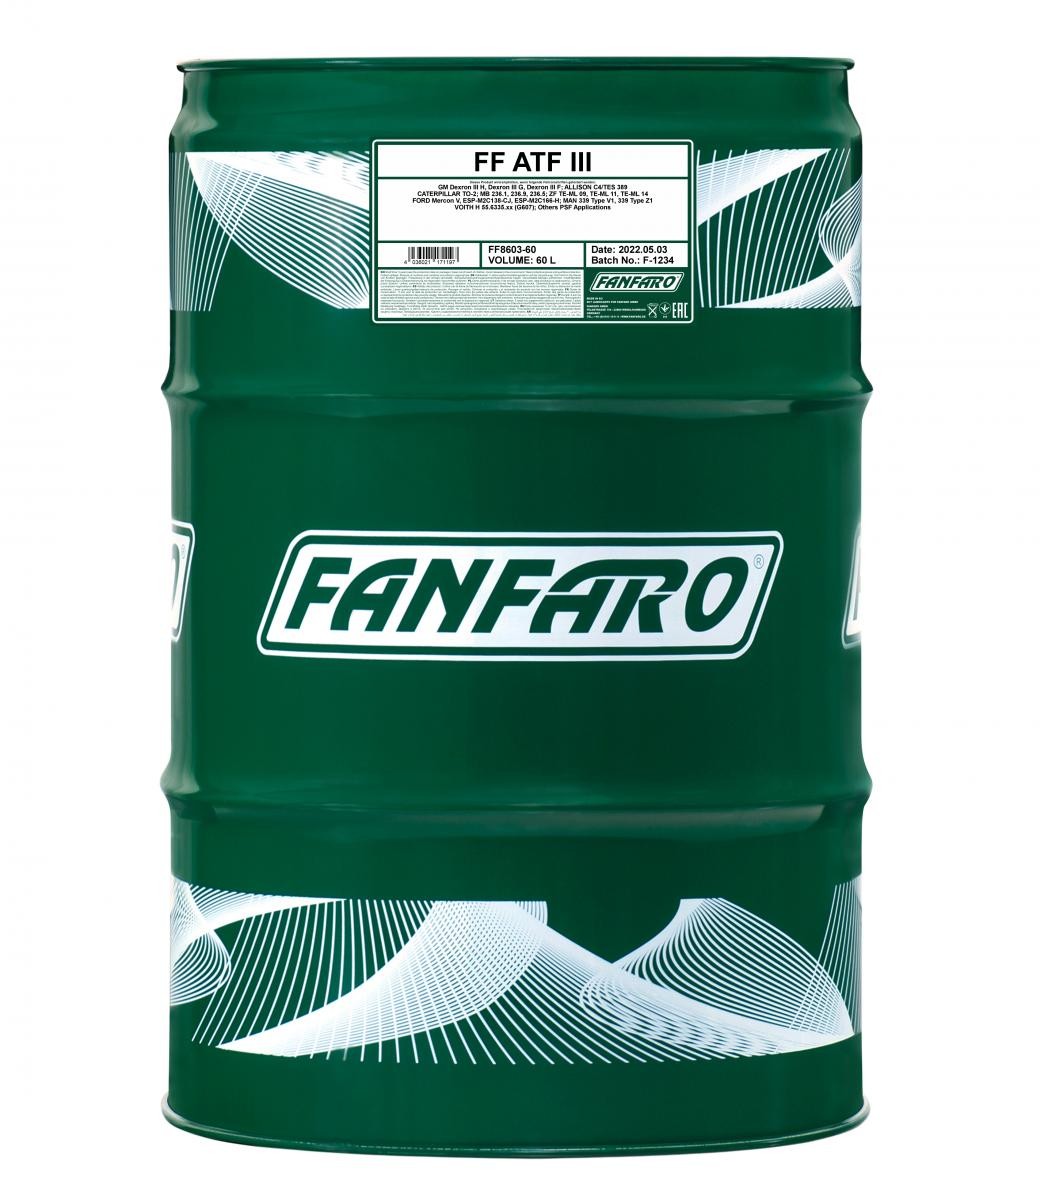 FF8603-60 FANFARO Automatikgetriebeöl DAF CF 65